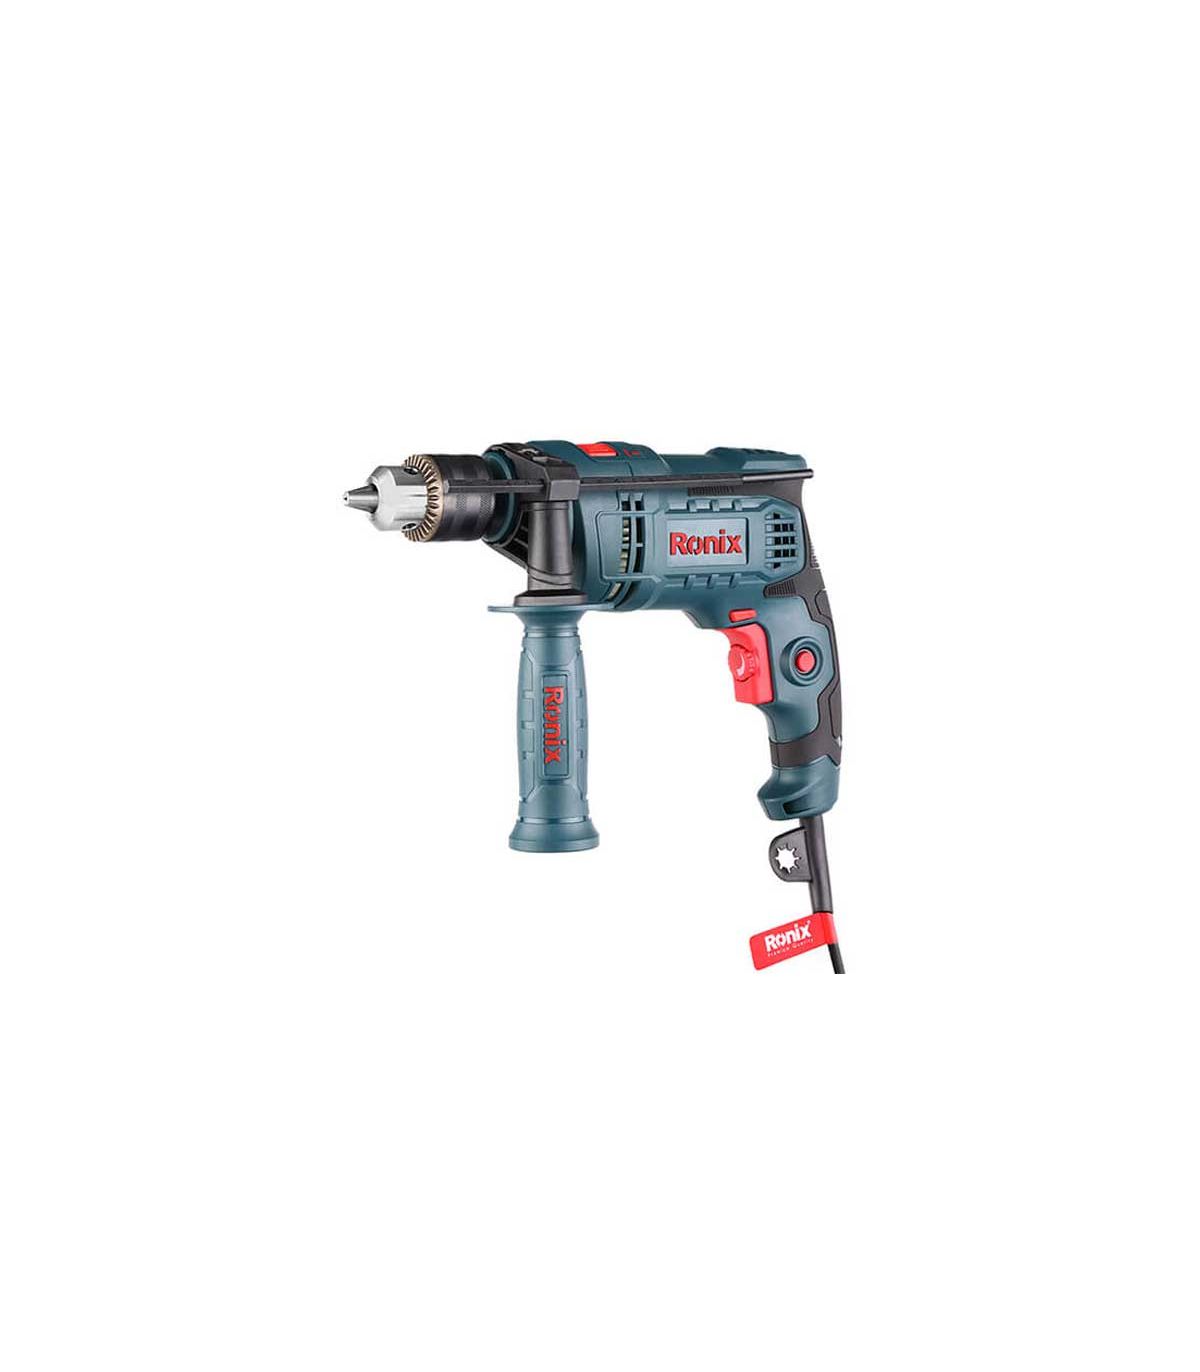 Ronix Hammer drill 2214